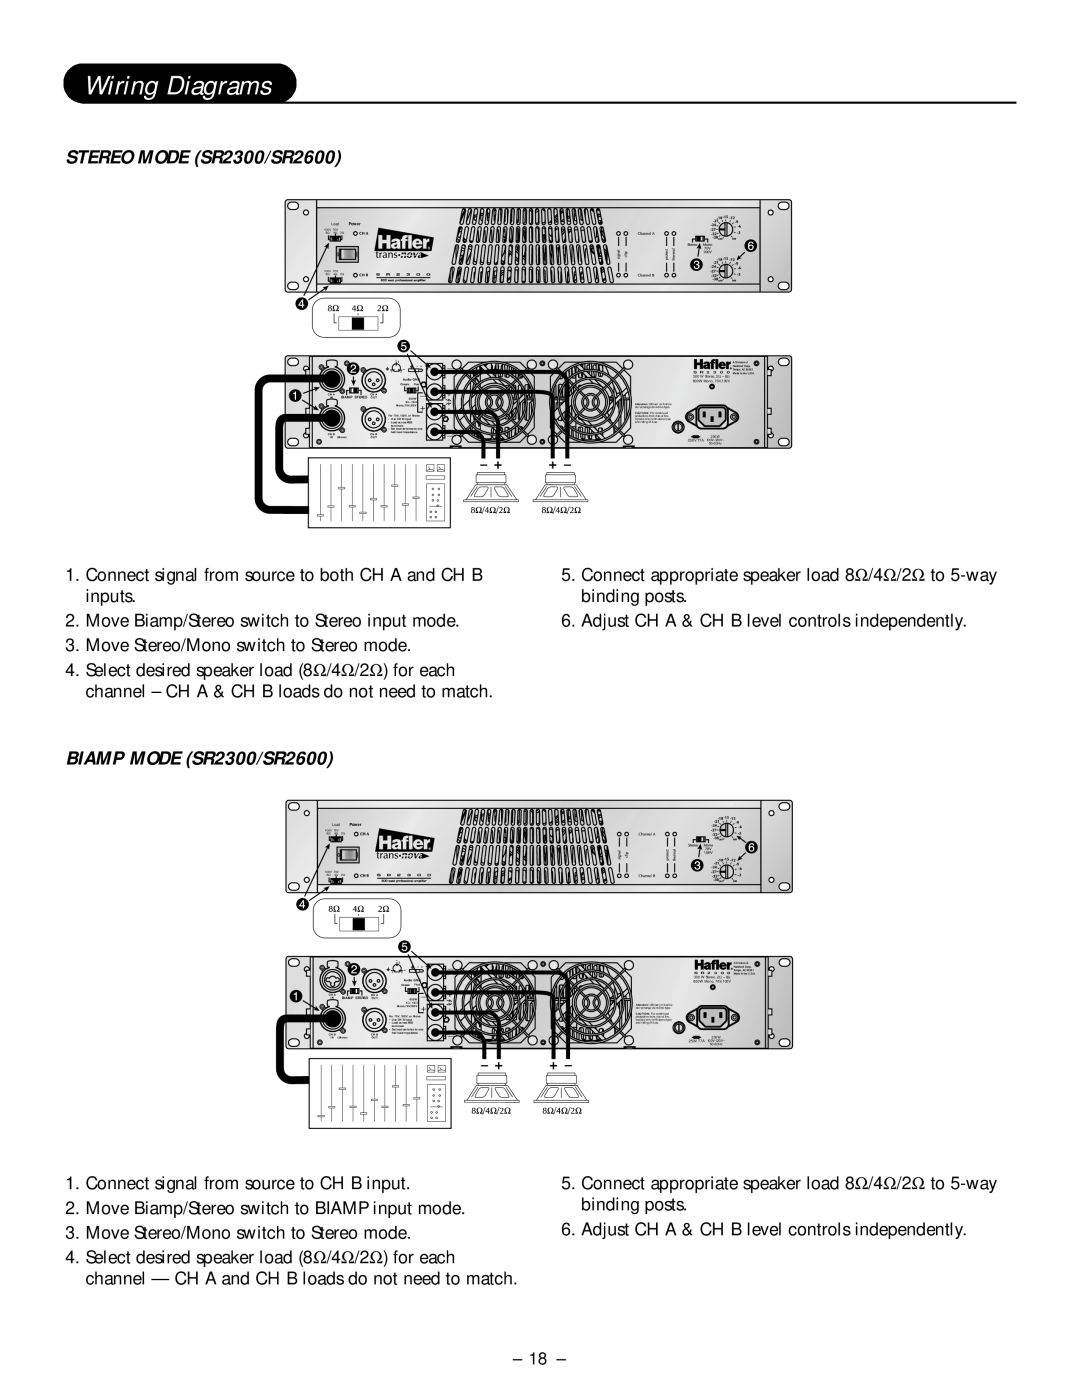 Hafler owner manual Wiring Diagrams, STEREO MODE SR2300/SR2600, BIAMP MODE SR2300/SR2600 